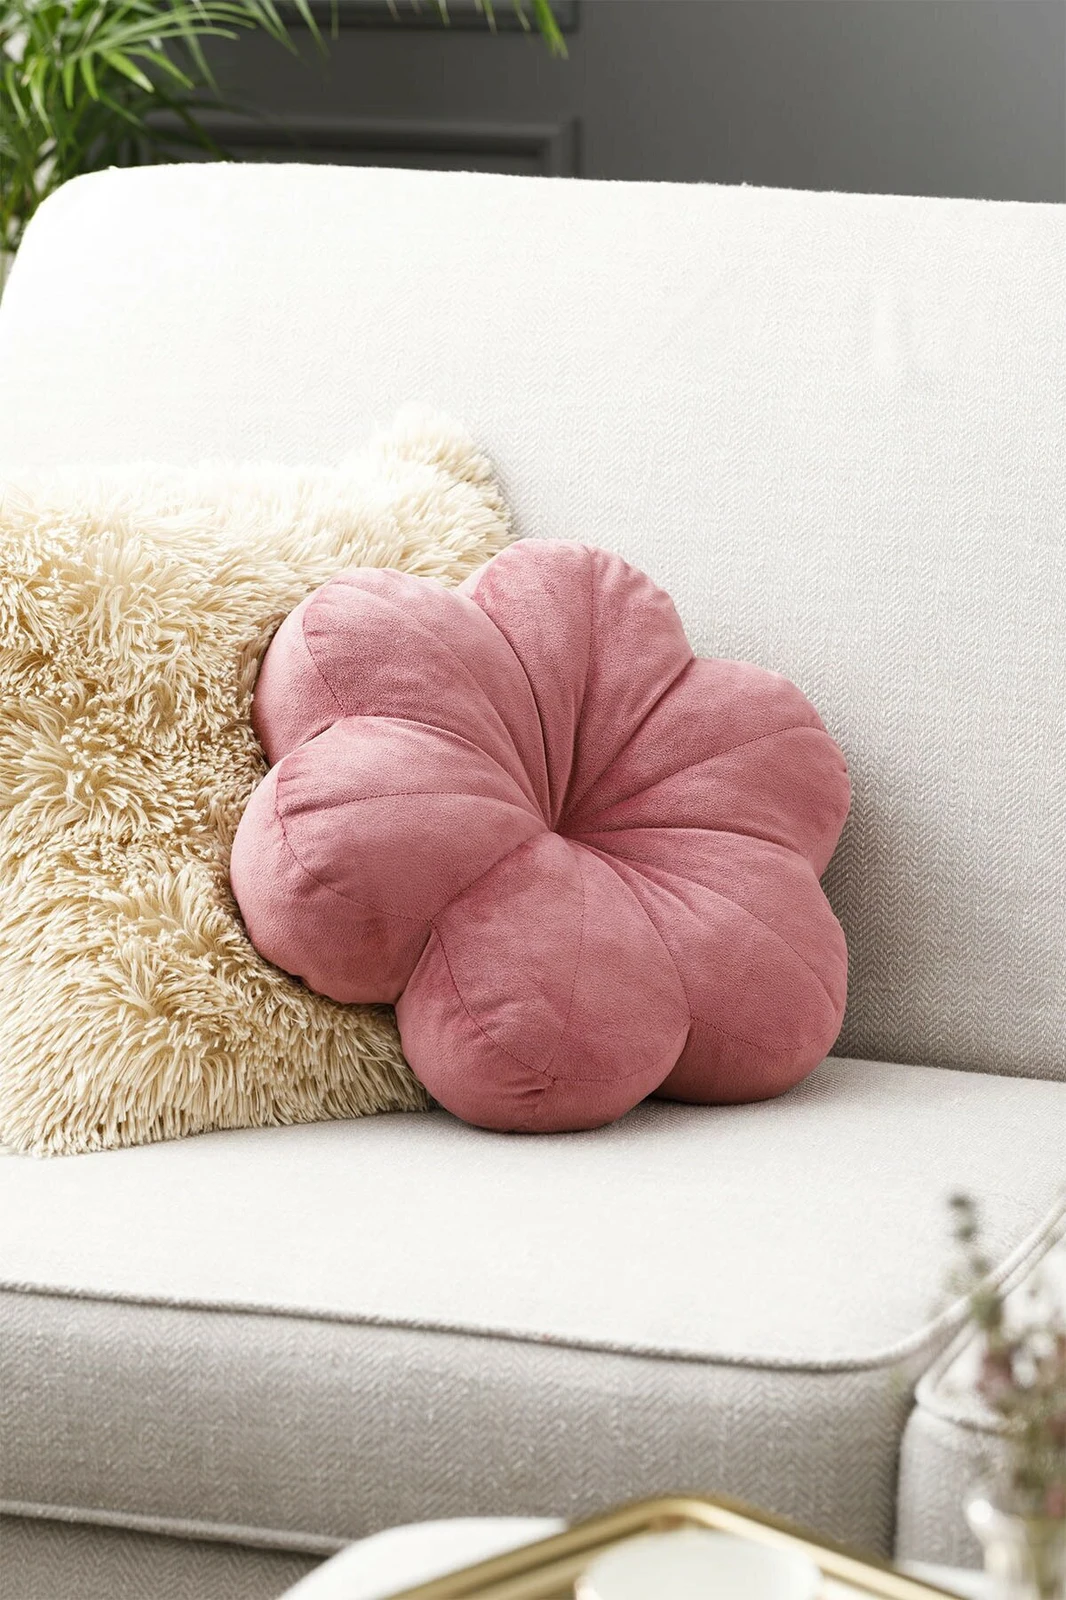 Enlarge Bloom Velvet Filled Pillow 40x40 Cm Home Decoration Bedroom Livingroom Pillow Gift Sofa Car Decorative Accessories Creative